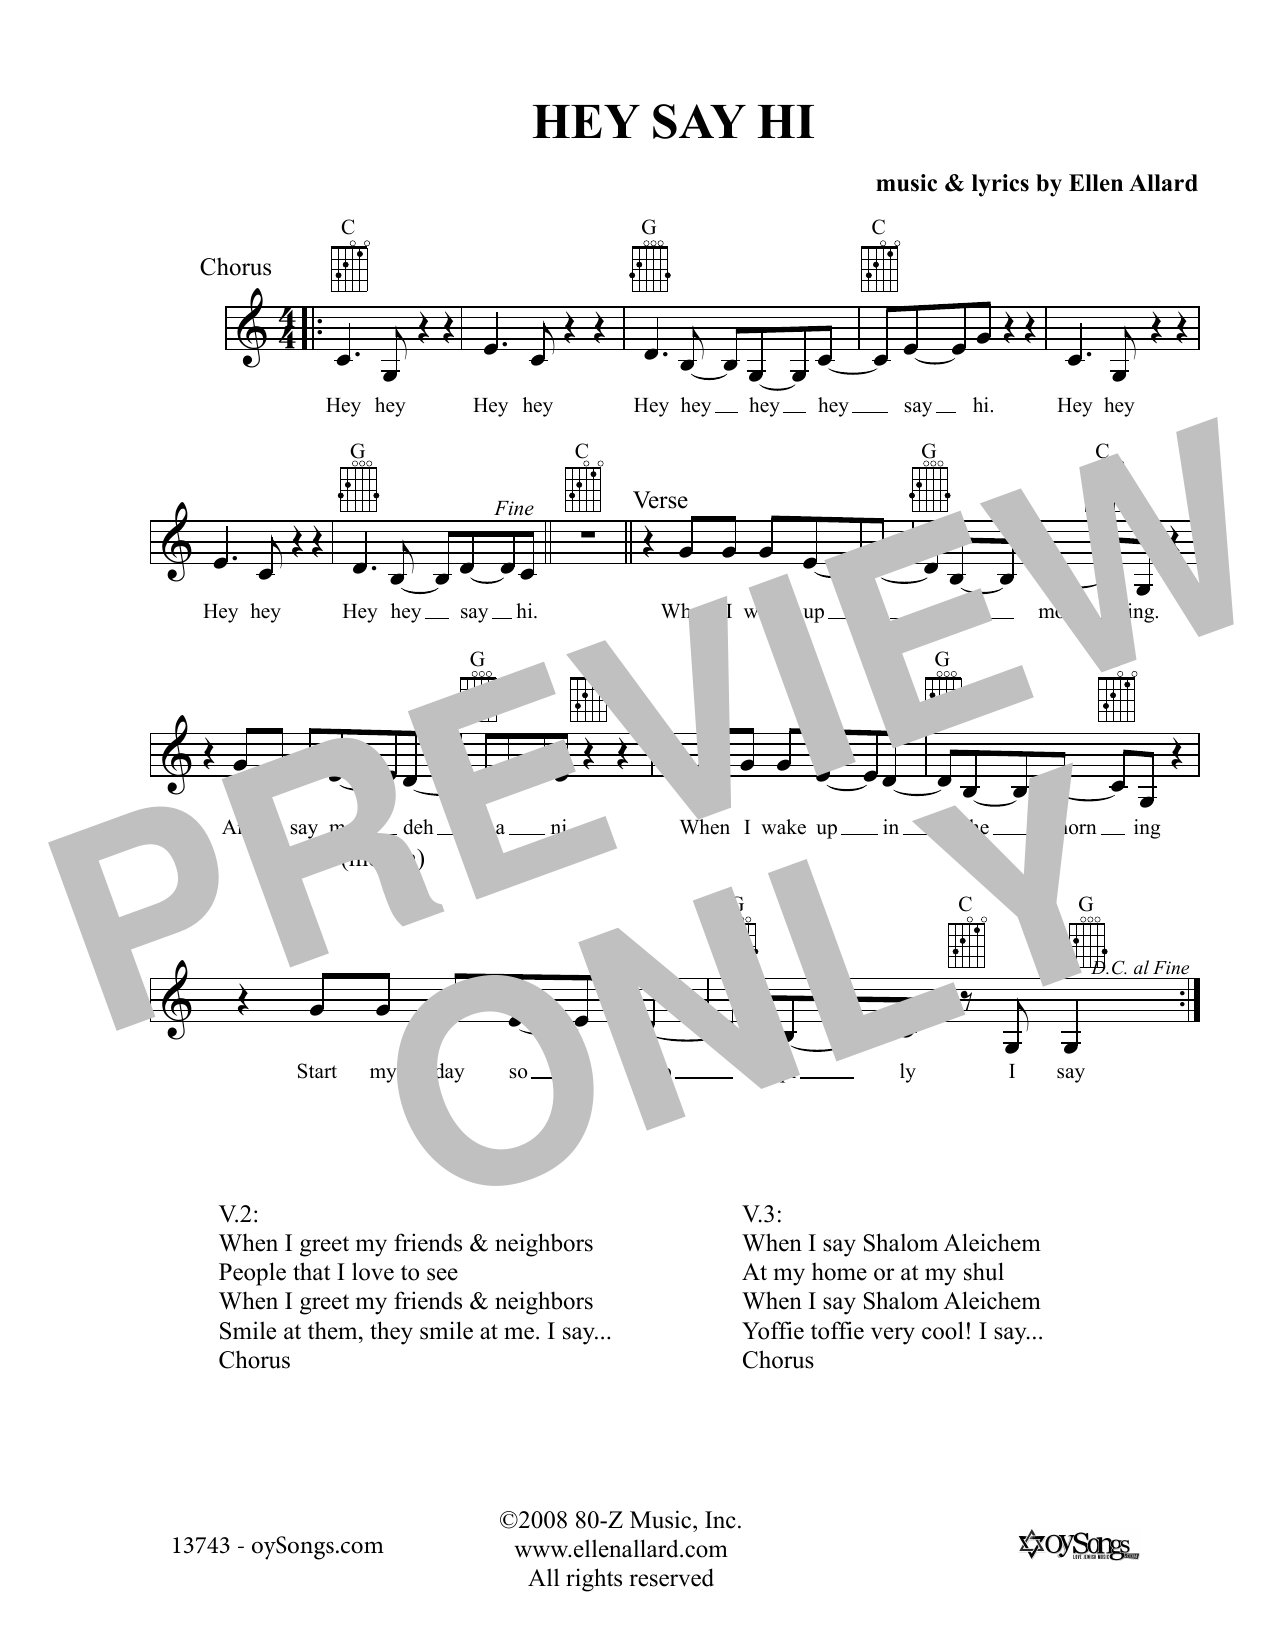 Ellen Allard Hey Say Hi Sheet Music Notes & Chords for Melody Line, Lyrics & Chords - Download or Print PDF